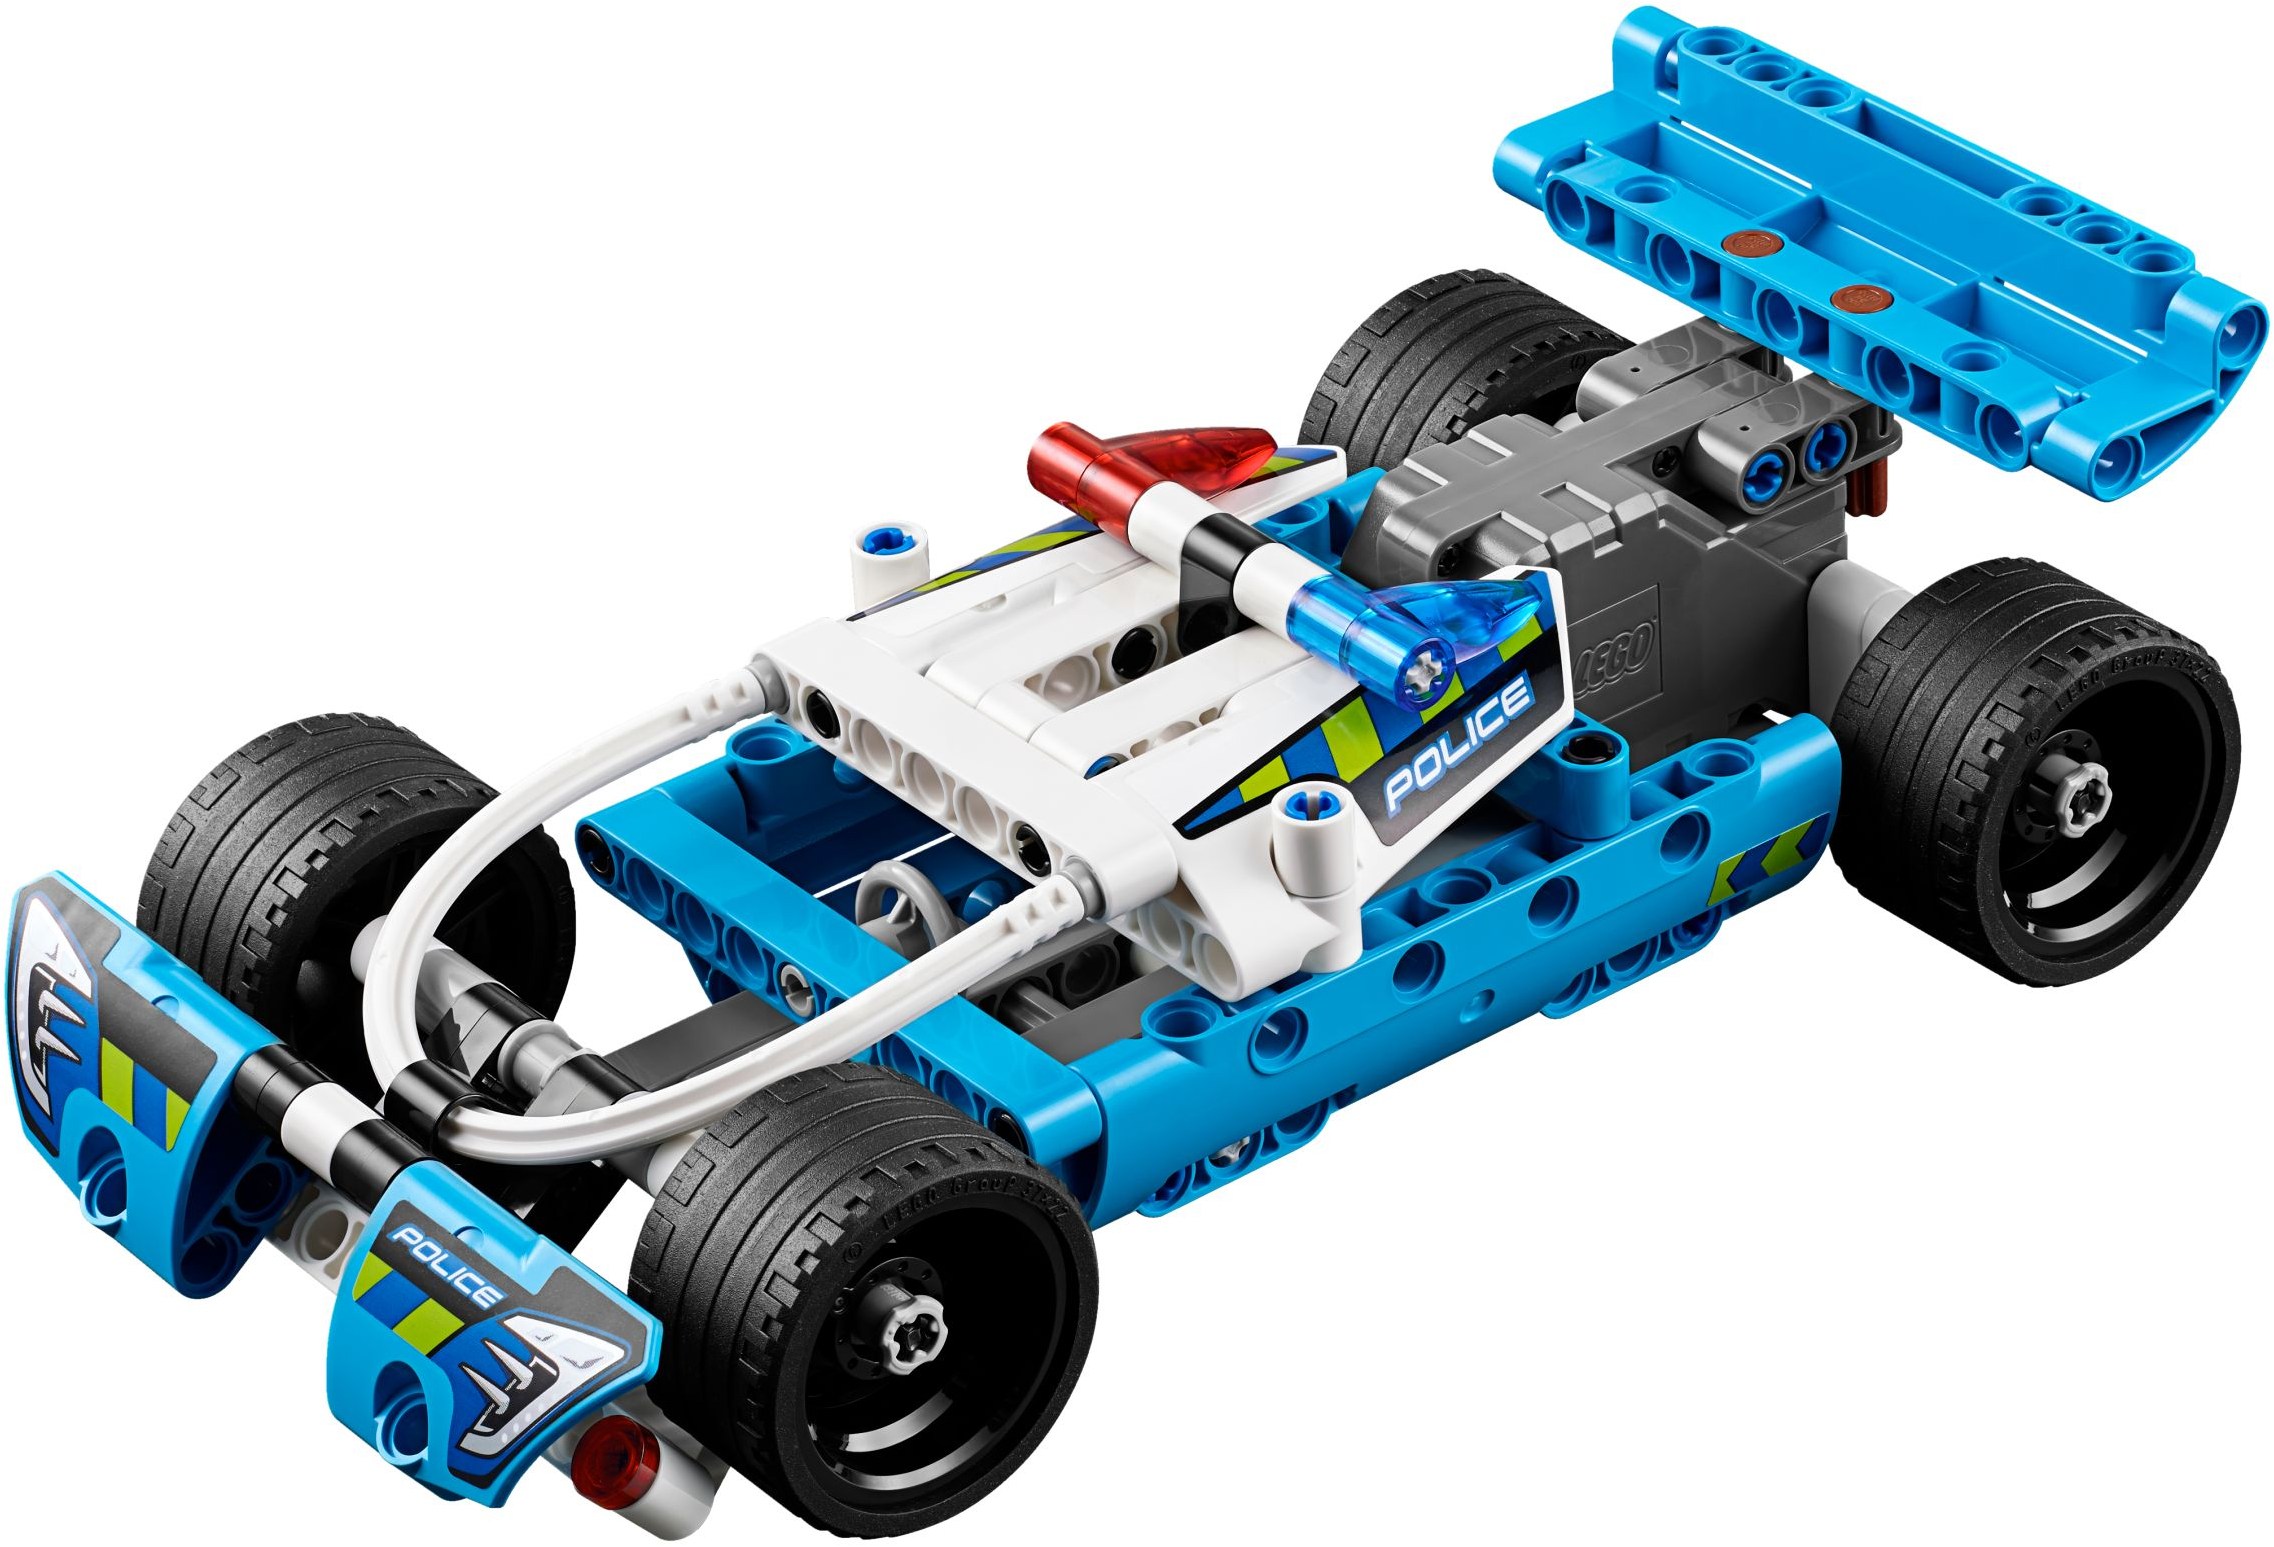 LEGO Technic 2019 Brickset